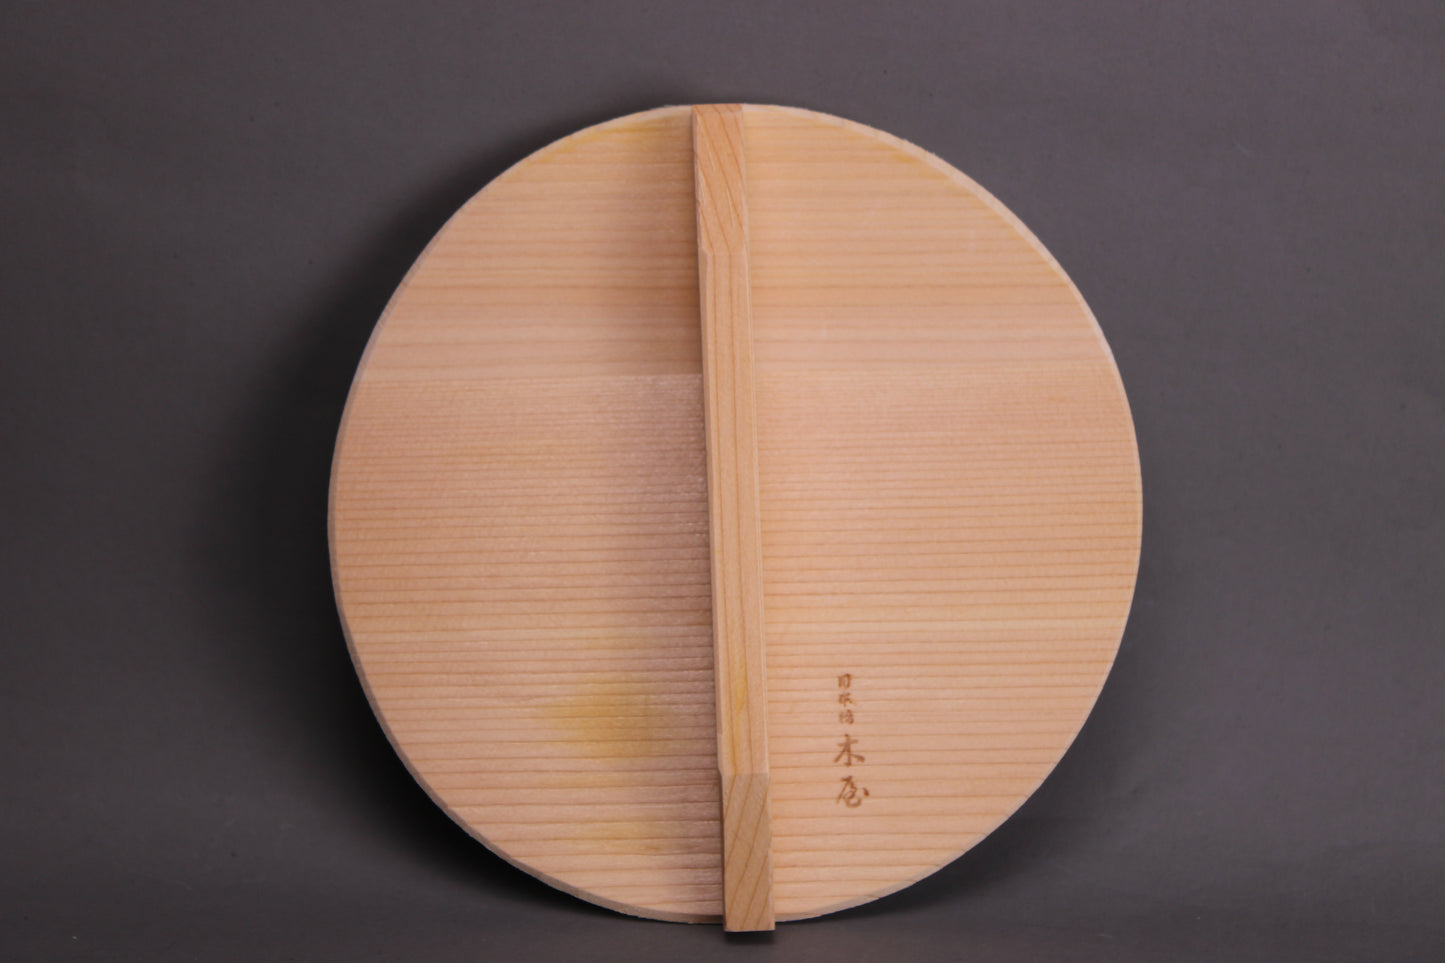 kiso hinoki drop lid with hiragana kiya 18cm shown with grey background frontside